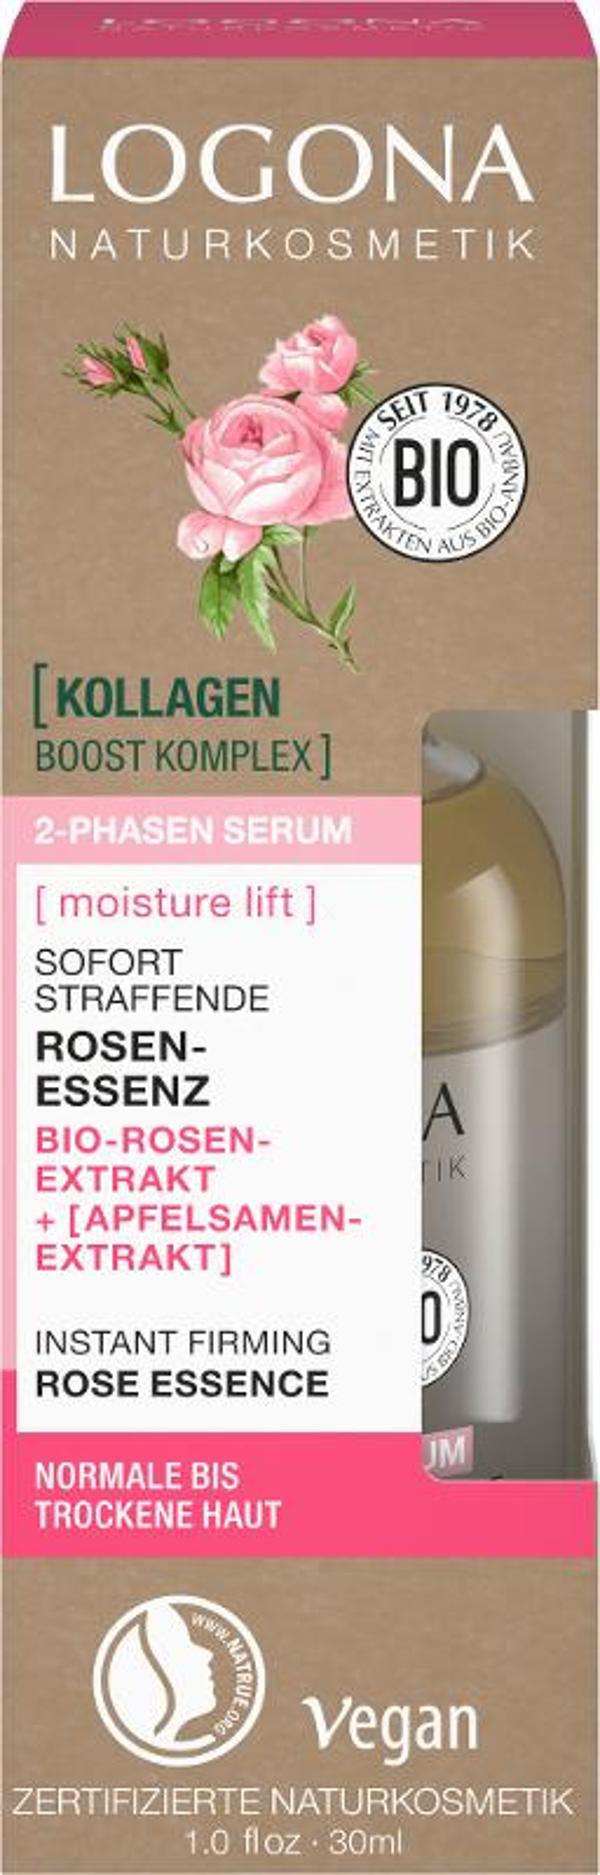 Produktfoto zu MOISTURE LIFT 2-Phasen Serum Rose & Apfel 30ml